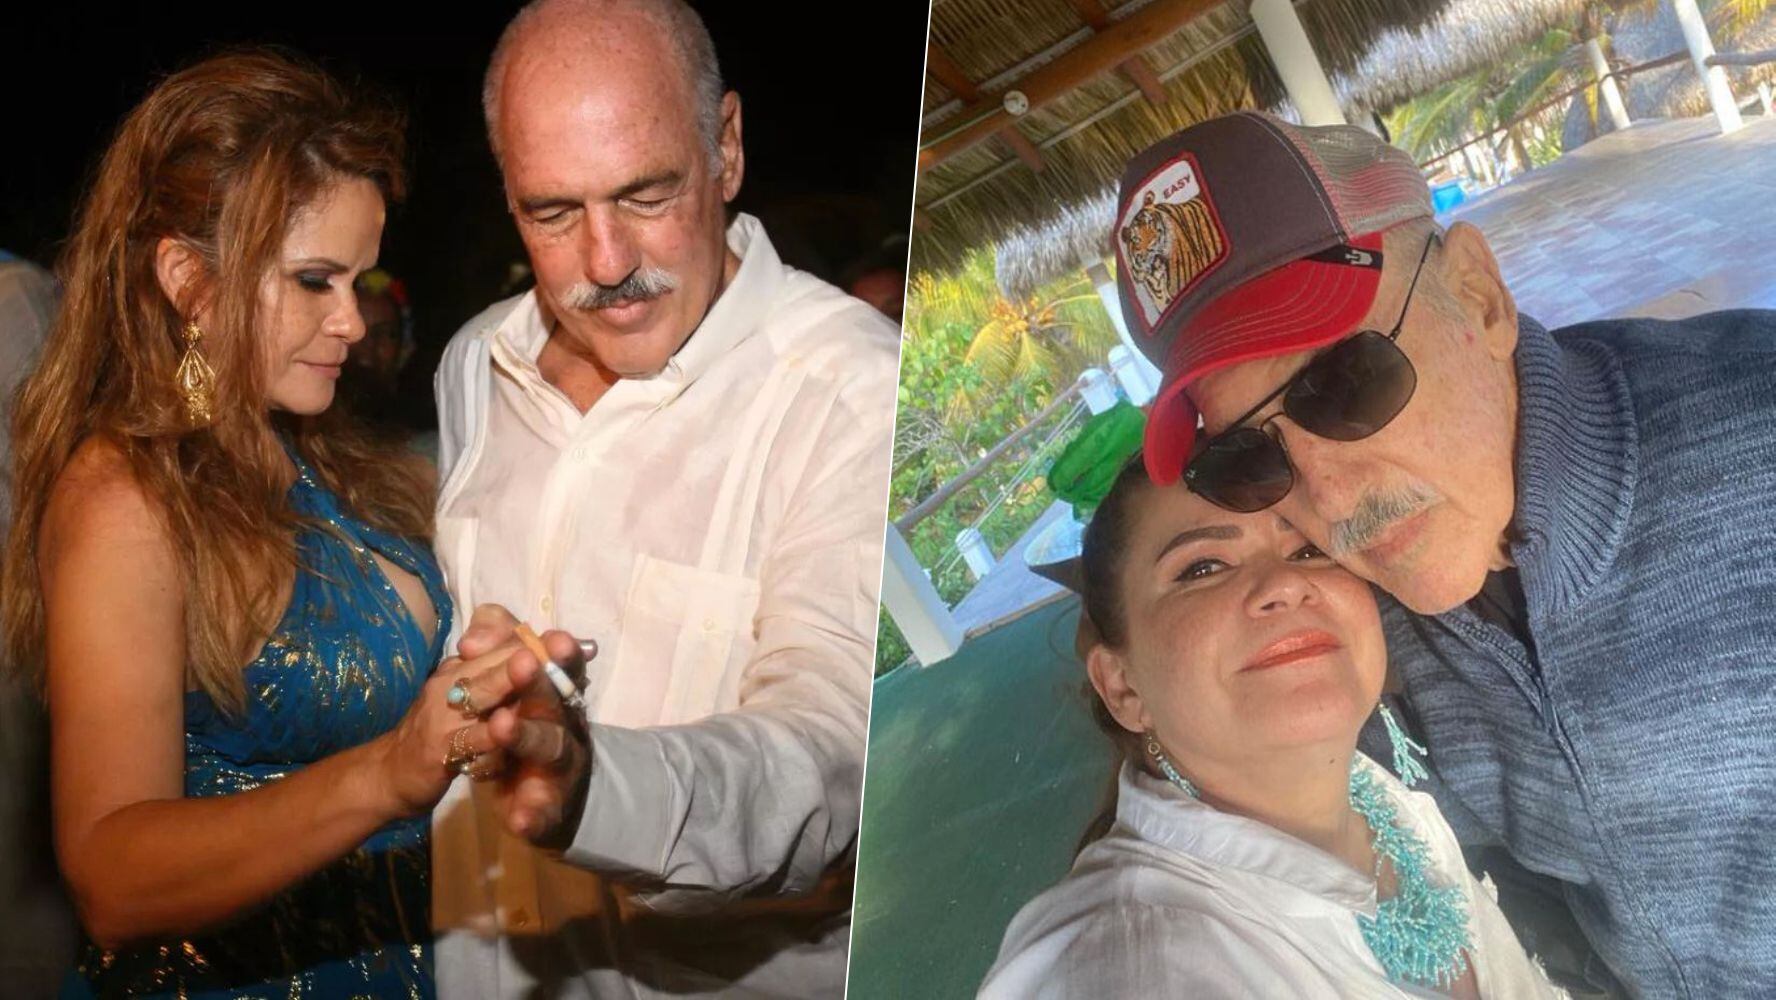 Margarita Portillo asegura que Andrés García casi muere por sobredosis de cocaína: ‘Llegó muy mal’